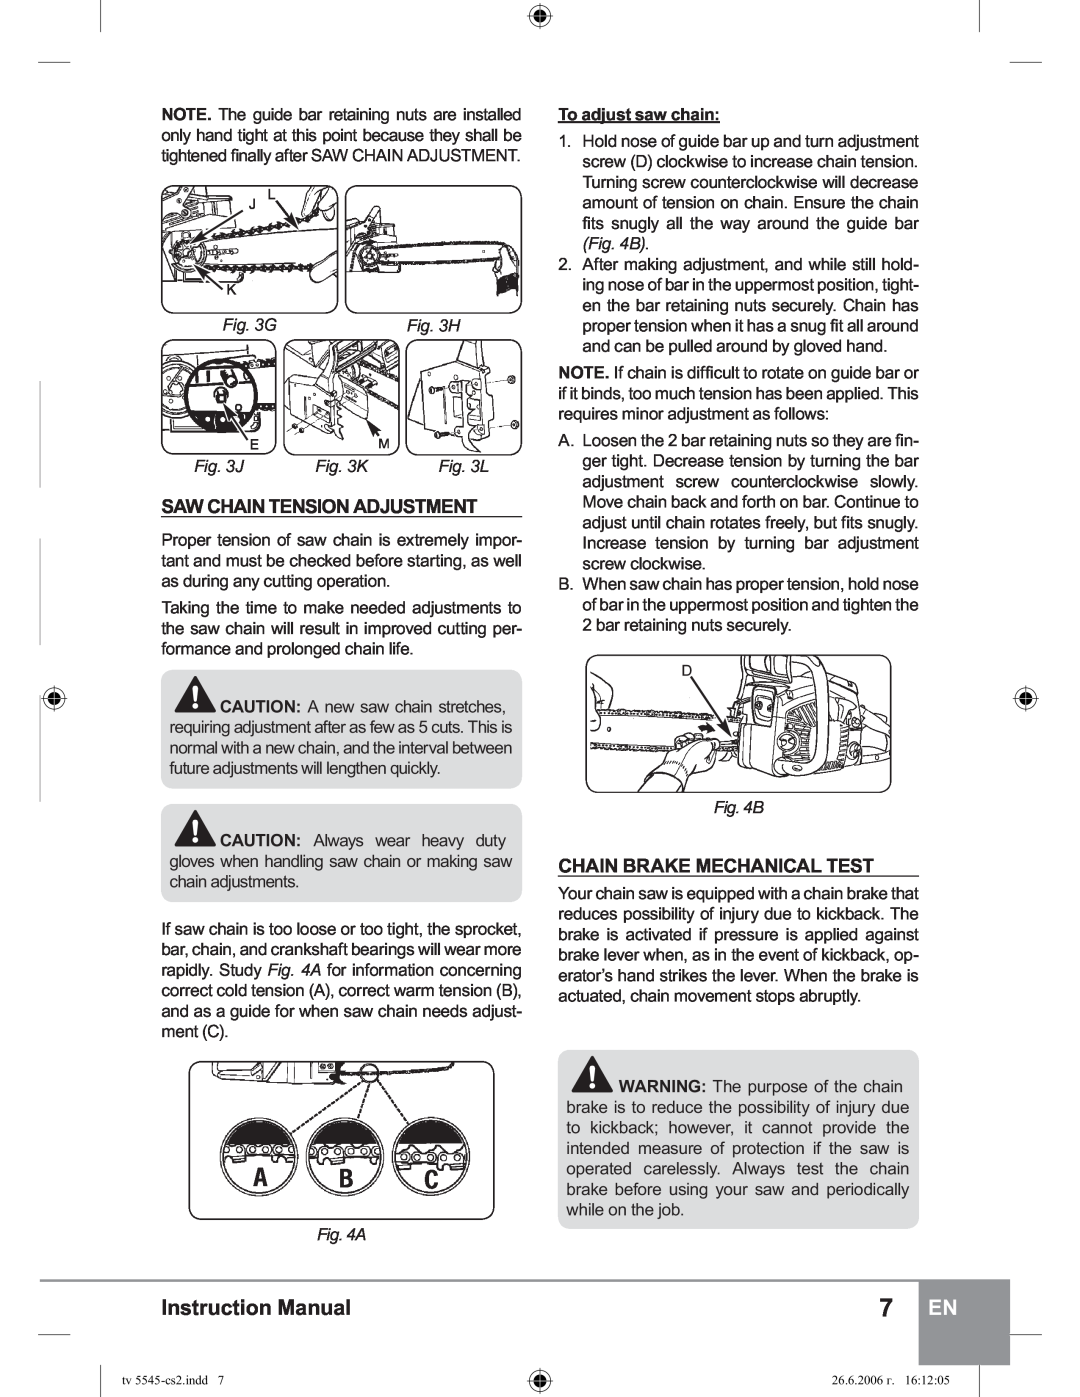 Sparky Group TV 5545 manual Saw Chain Tension Adjustment, Chain Brake Mechanical Test, G, J, K, Instruction Manual, H, L 